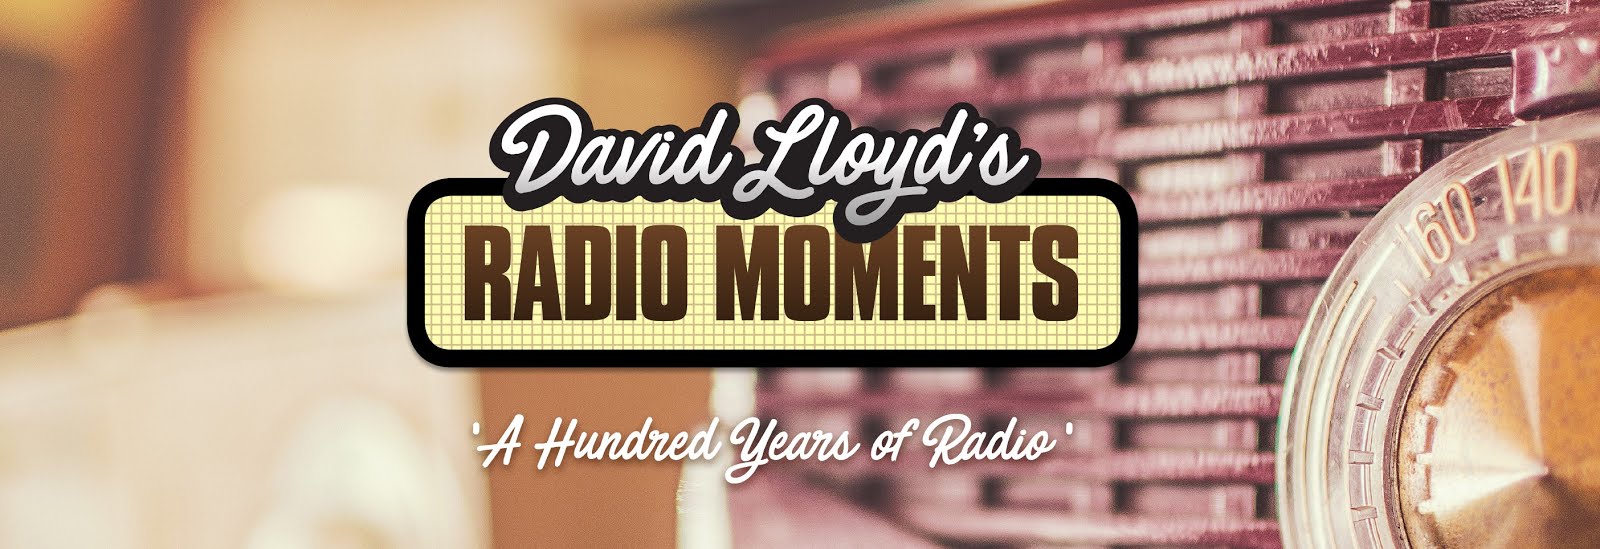 Radio Moments 